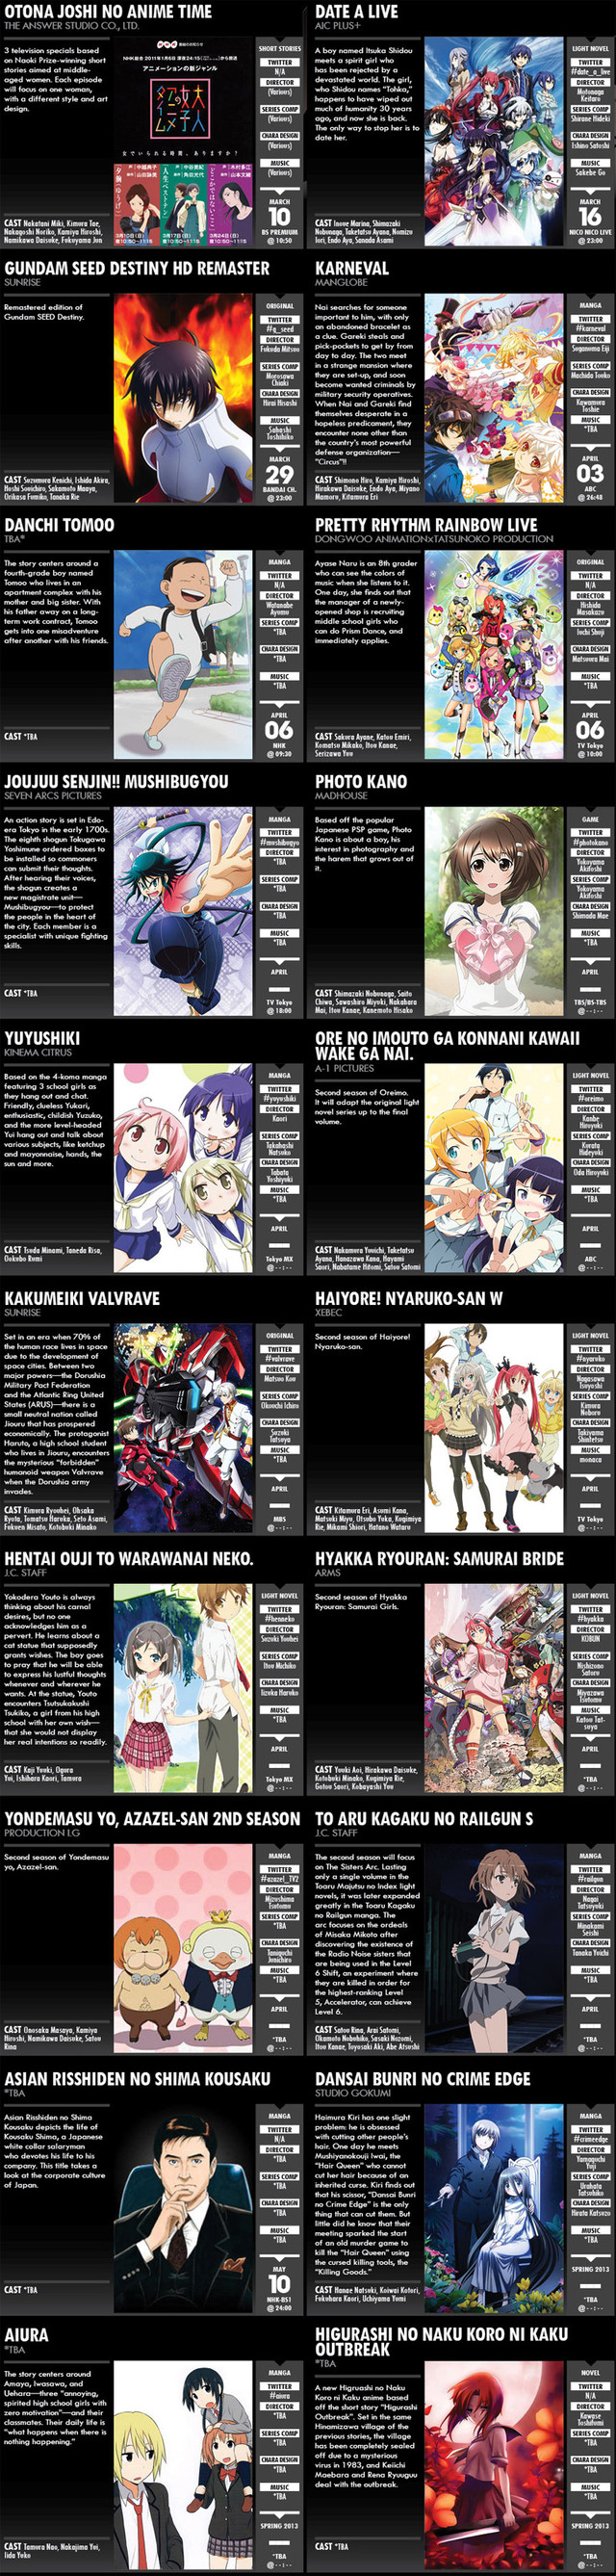 Spring 2011 Anime Chart